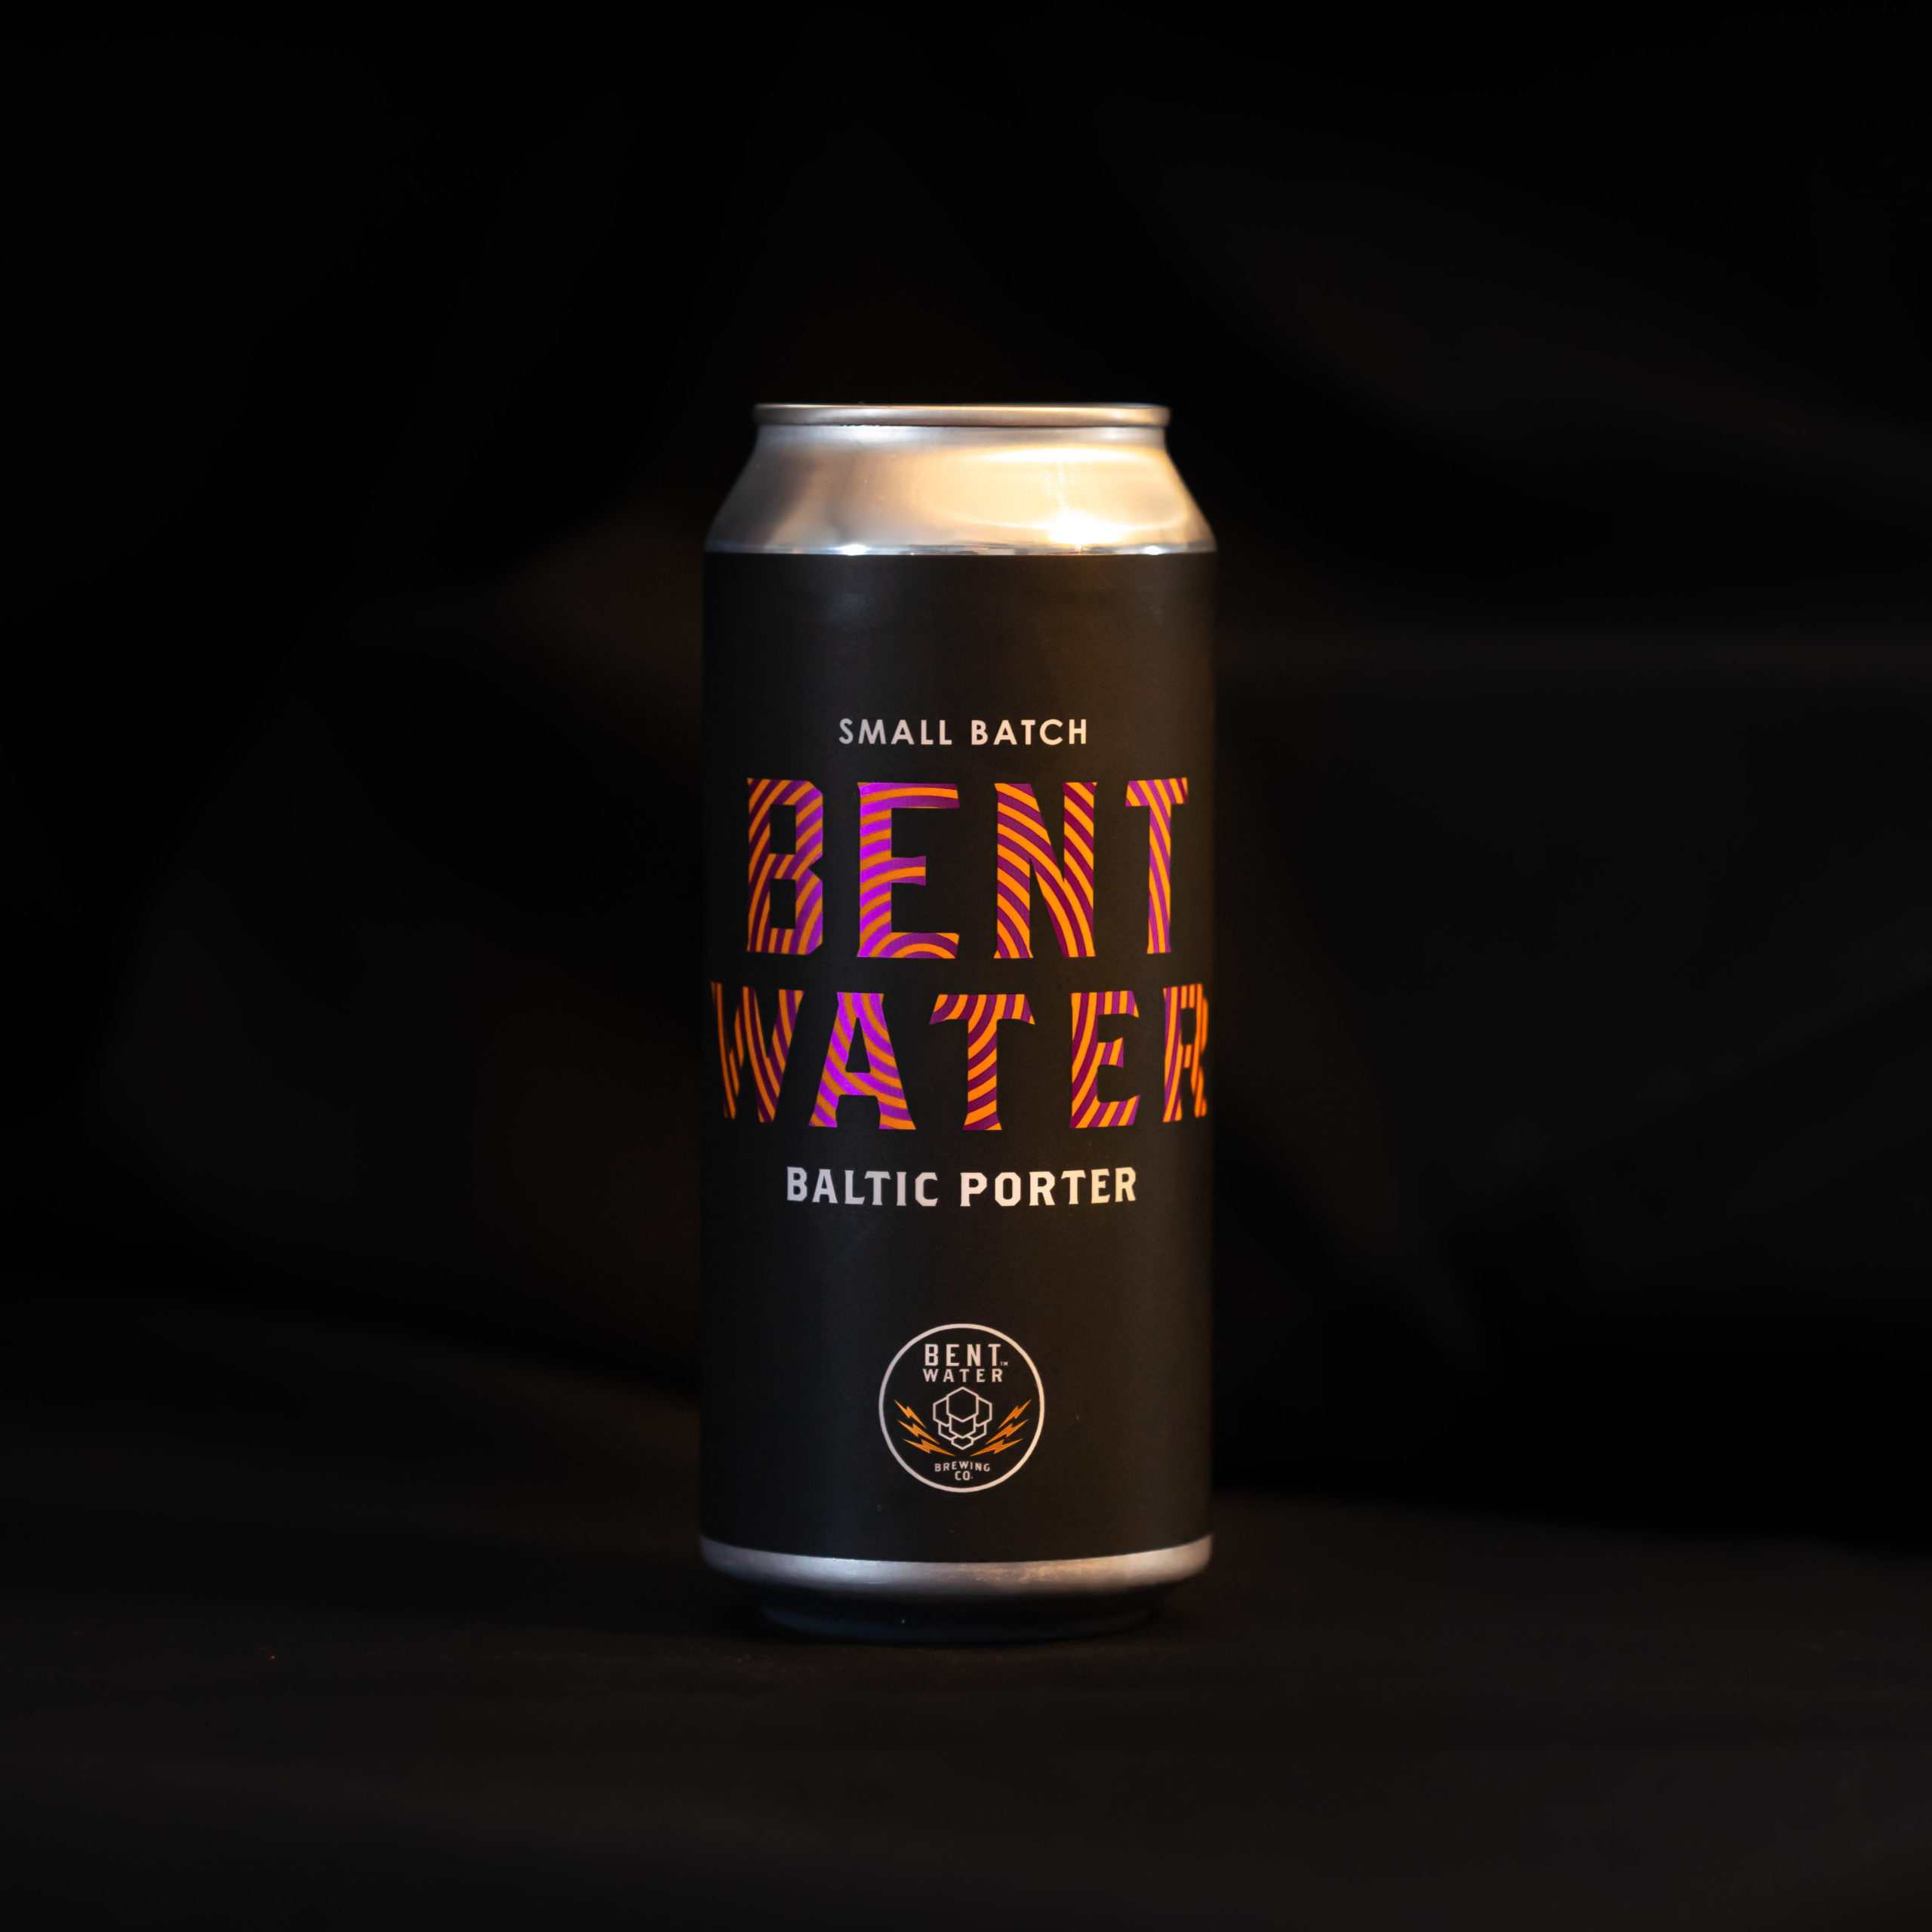 Baltic Porter beer image 2